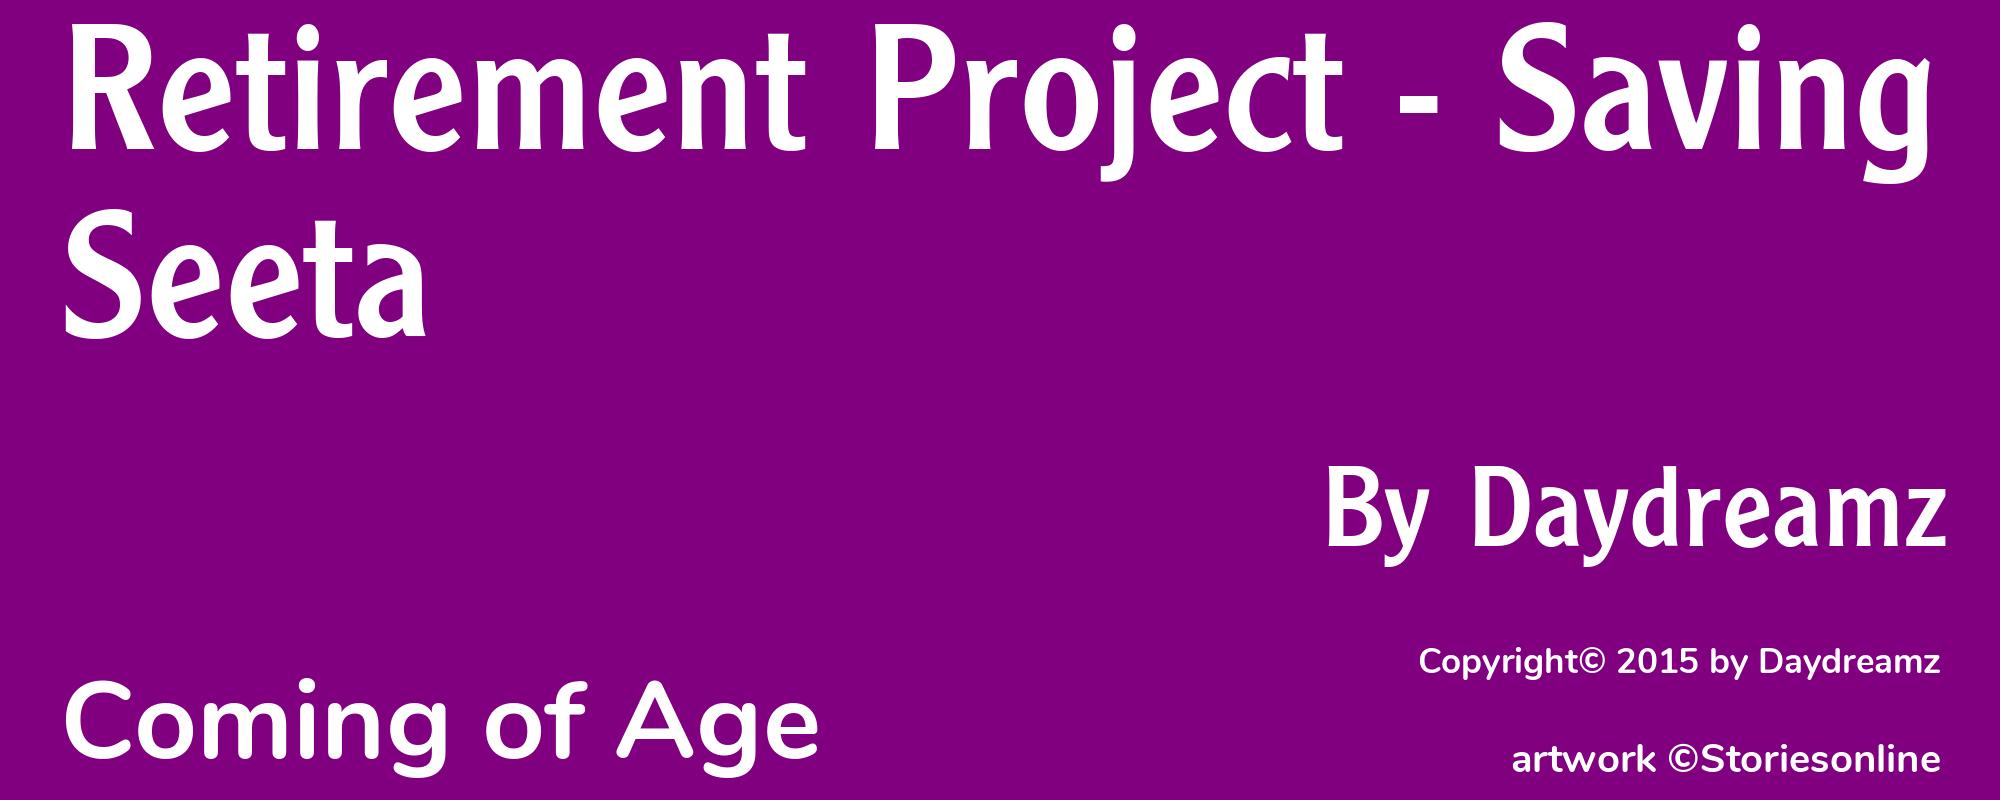 Retirement Project - Saving Seeta - Cover